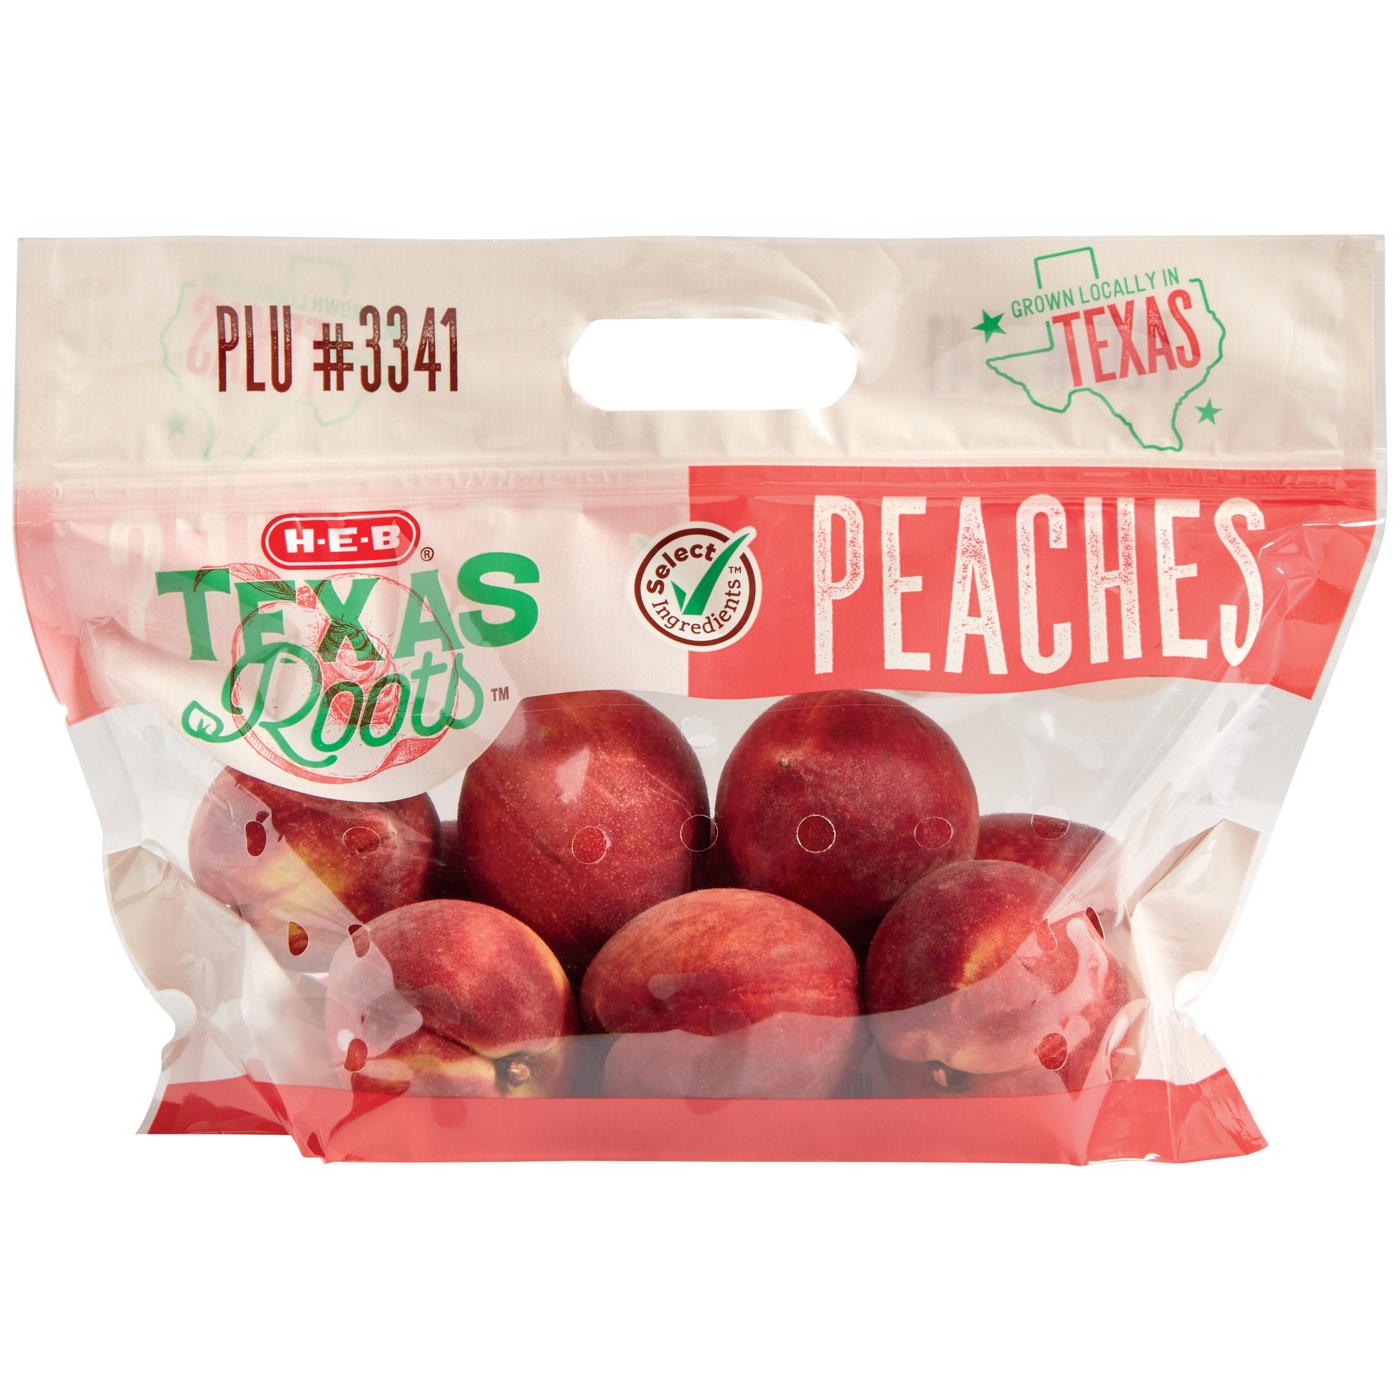 H-E-B Texas Roots Fresh Peaches; image 1 of 3